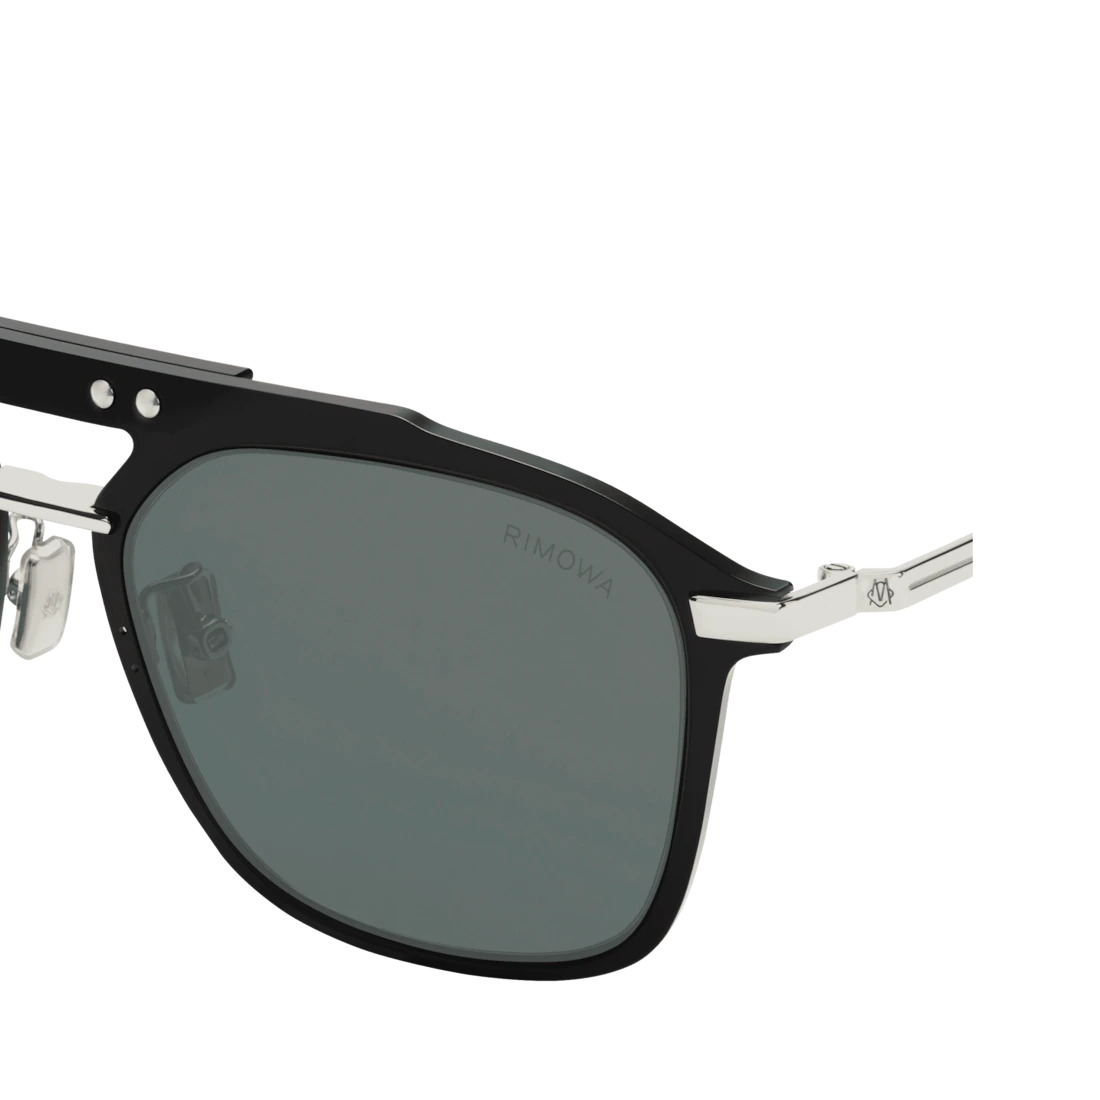 Eyewear Navigator Black Sunglasses - 6